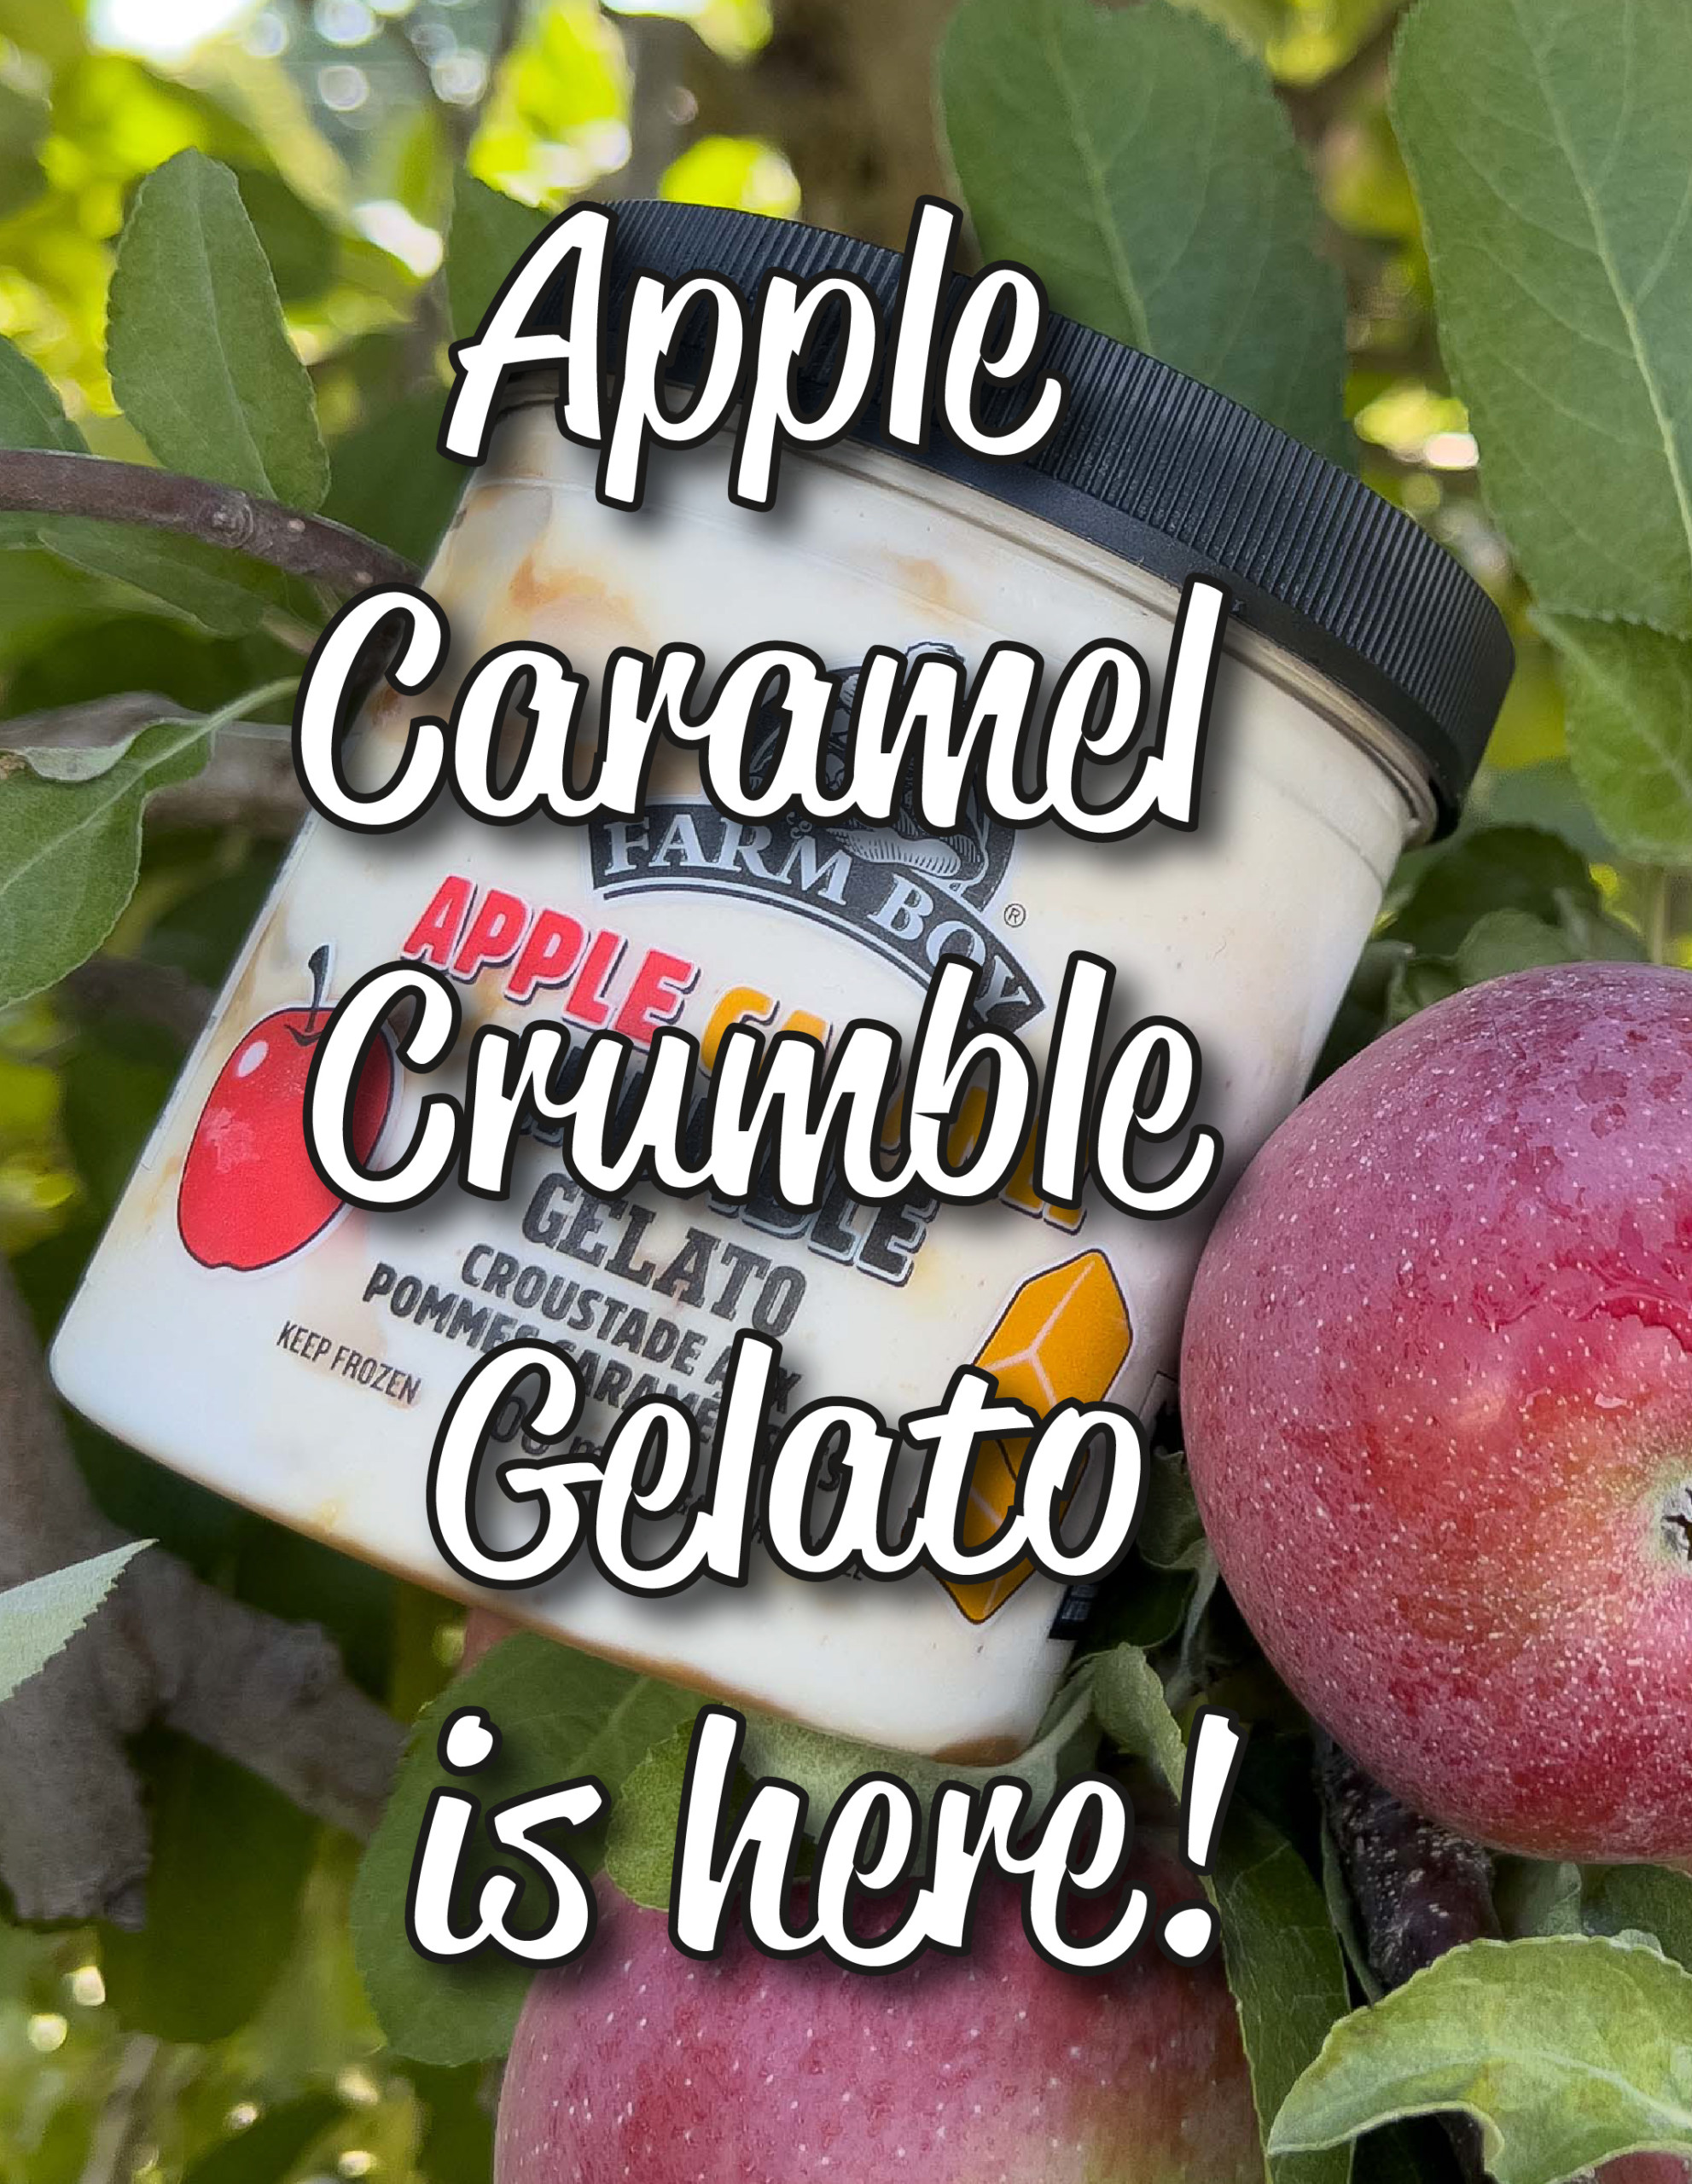 apple-caramel-crumble-gelato-is-here